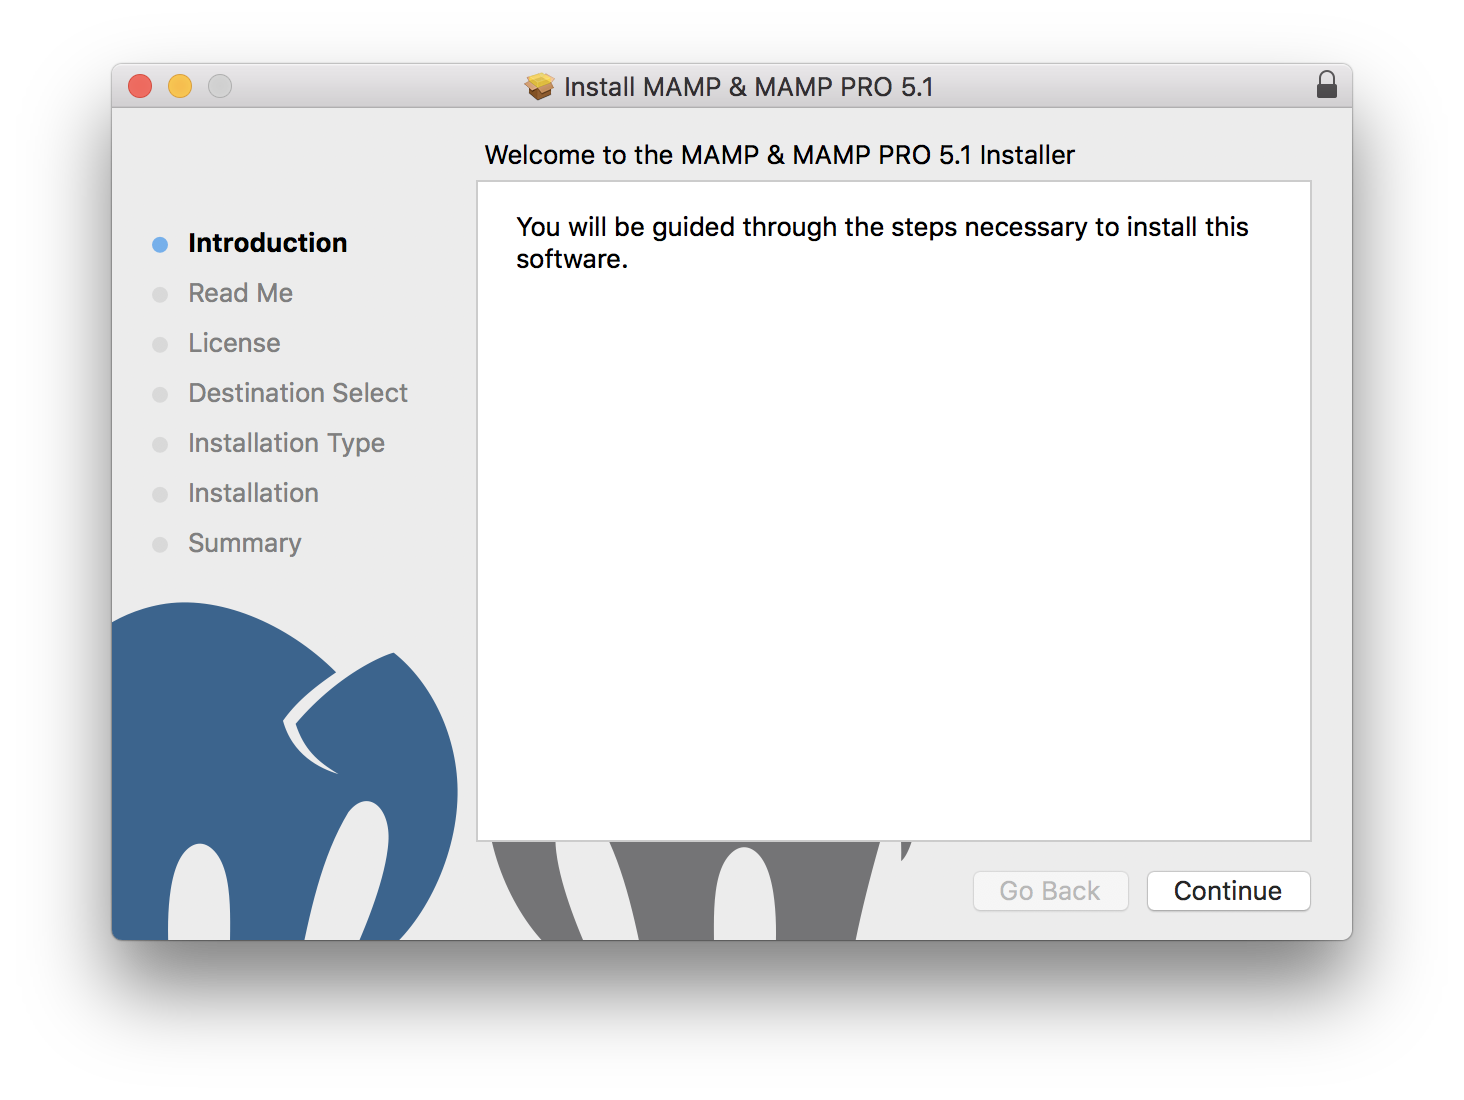 Graphlab installation instructions for mac